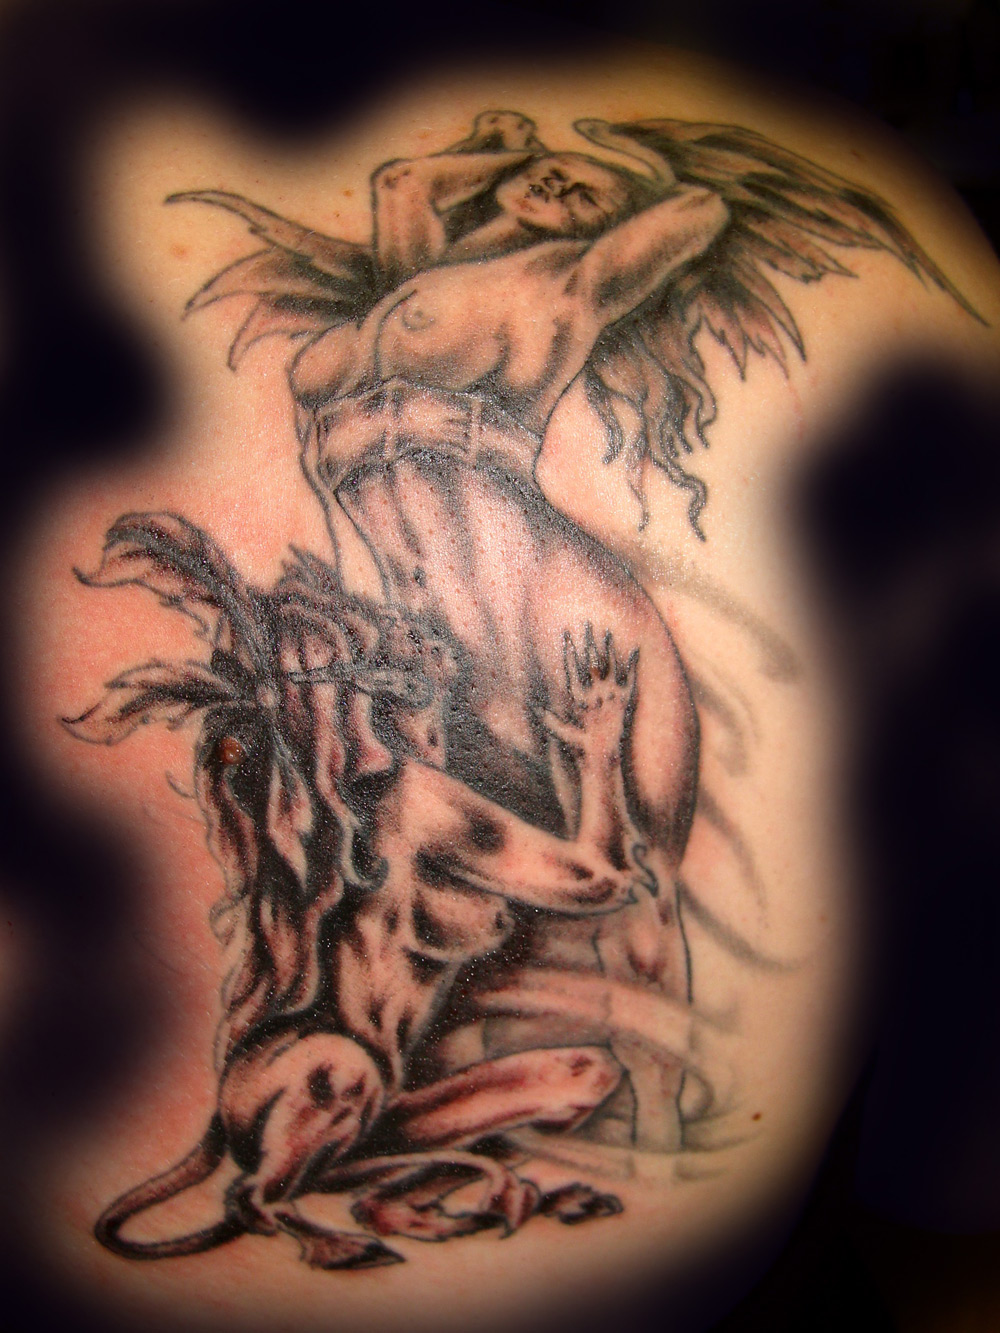 Angel killing demon tattoo meaning